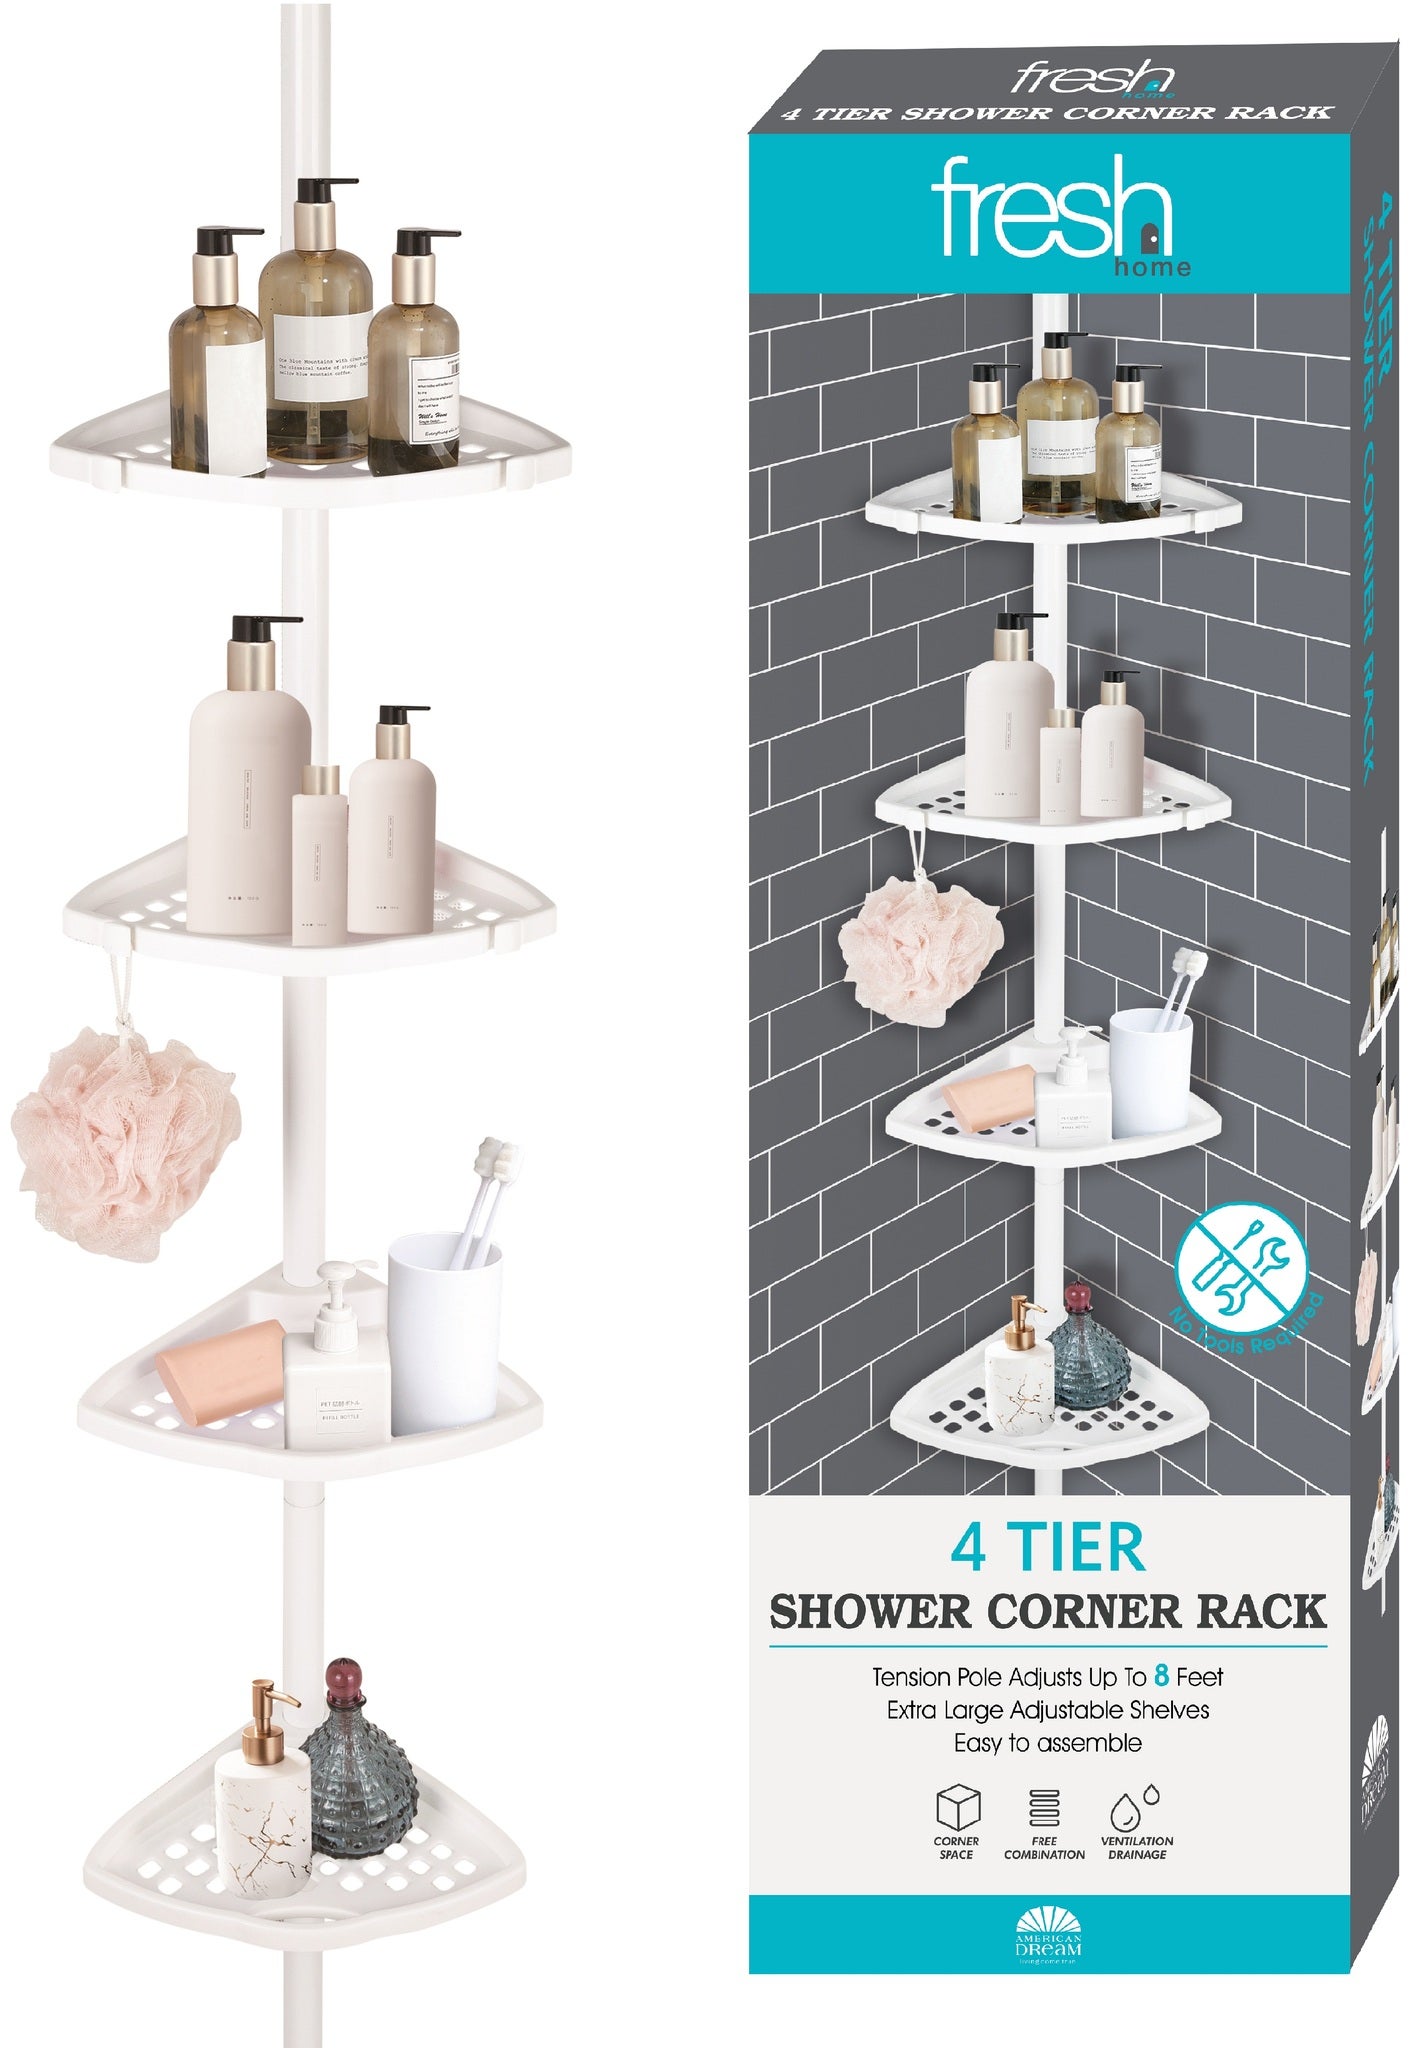 Dracelo Sliver Shower Caddy Corner, 4 Tier Shower Organizer, Large Shower Storage and Shower Caddy Tension Pole